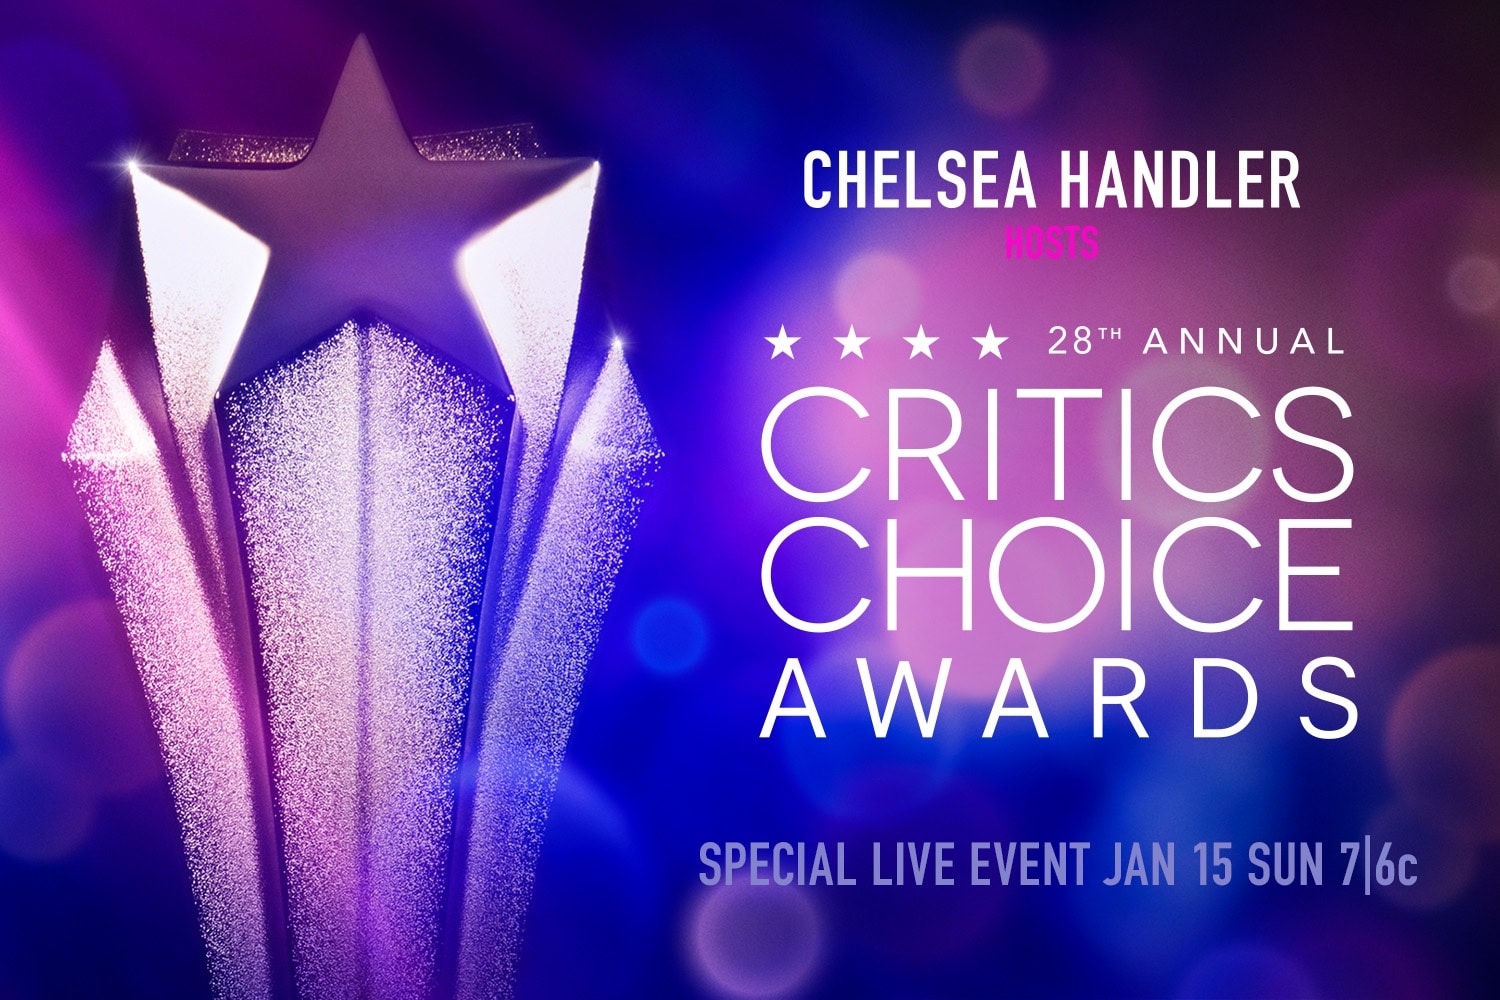 The 28th Annual Critics Choice Awards Air Tonight